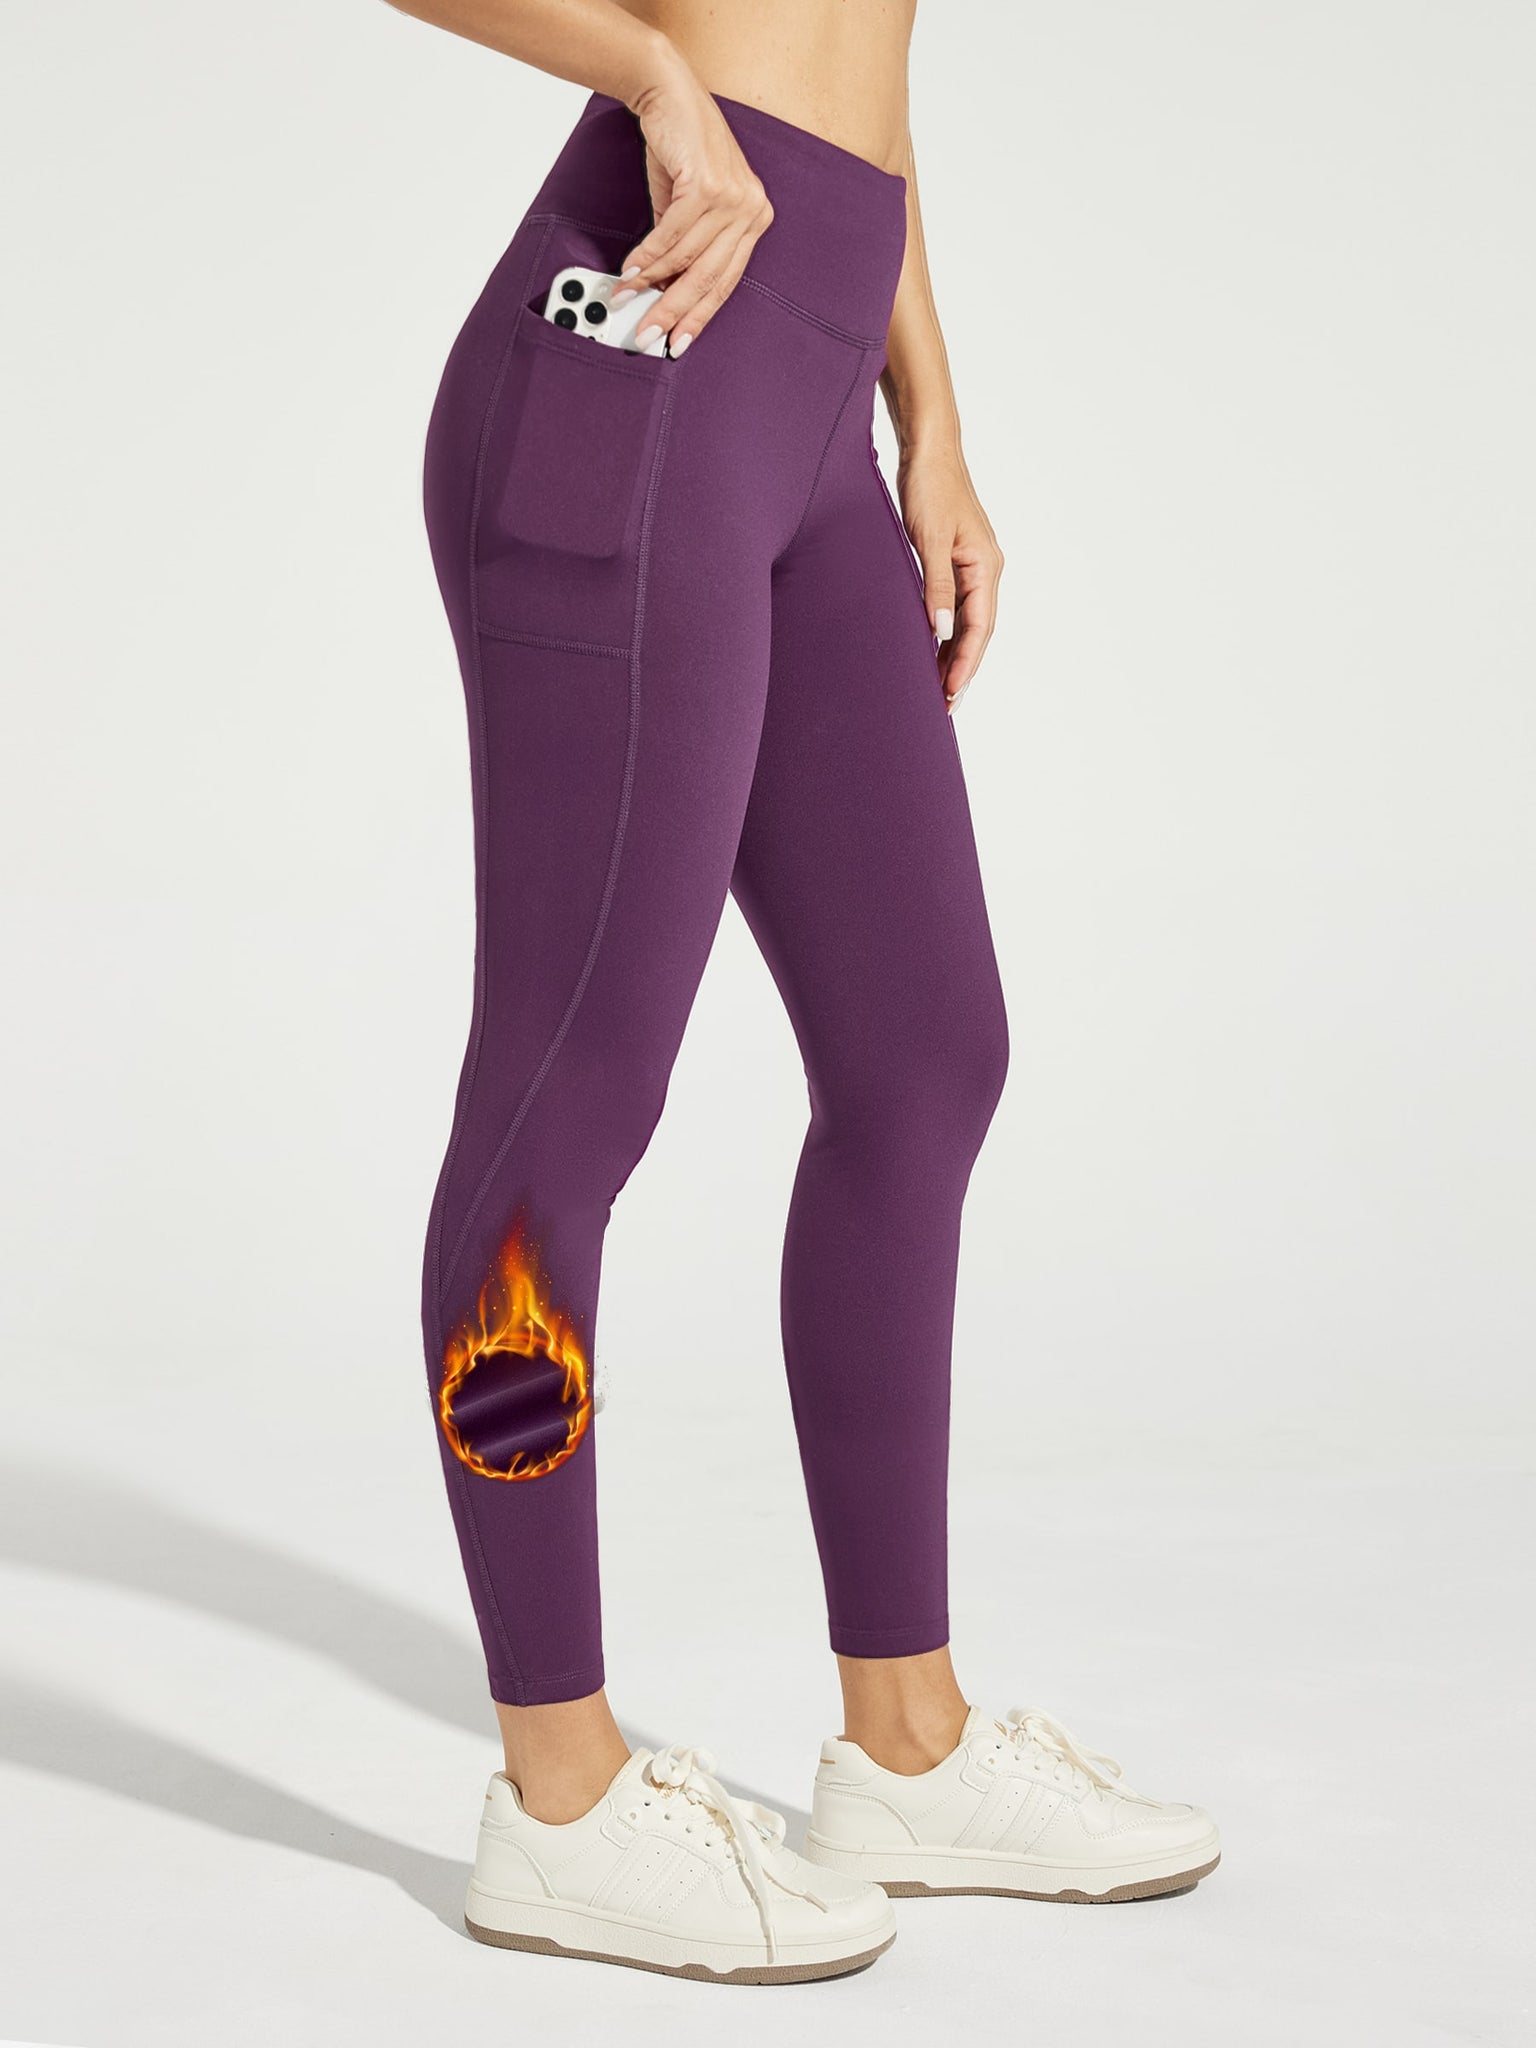 Women's Thermal Running Tights_Leggings_Purple_model1